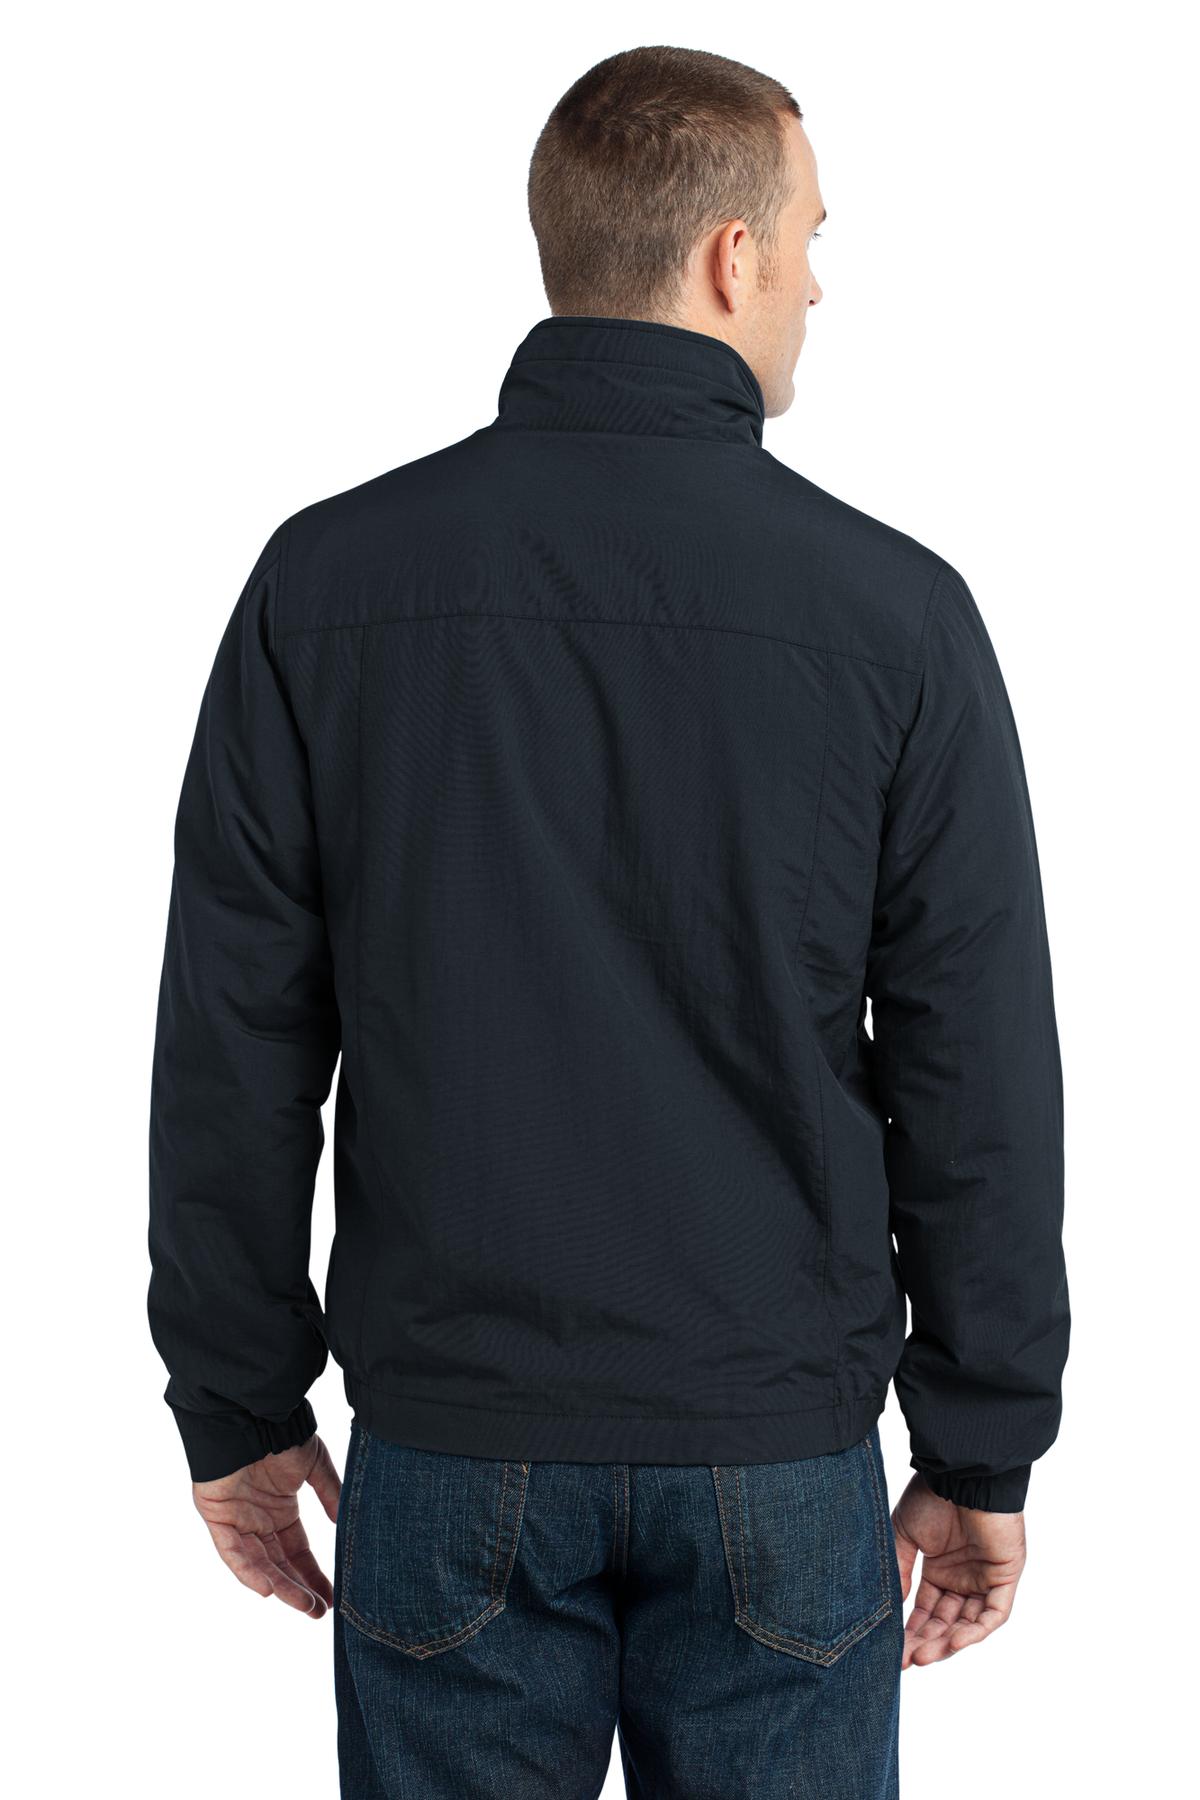 Eddie Bauer ® - Fleece-Lined Jacket. EB520 - Custom Shirt Shop